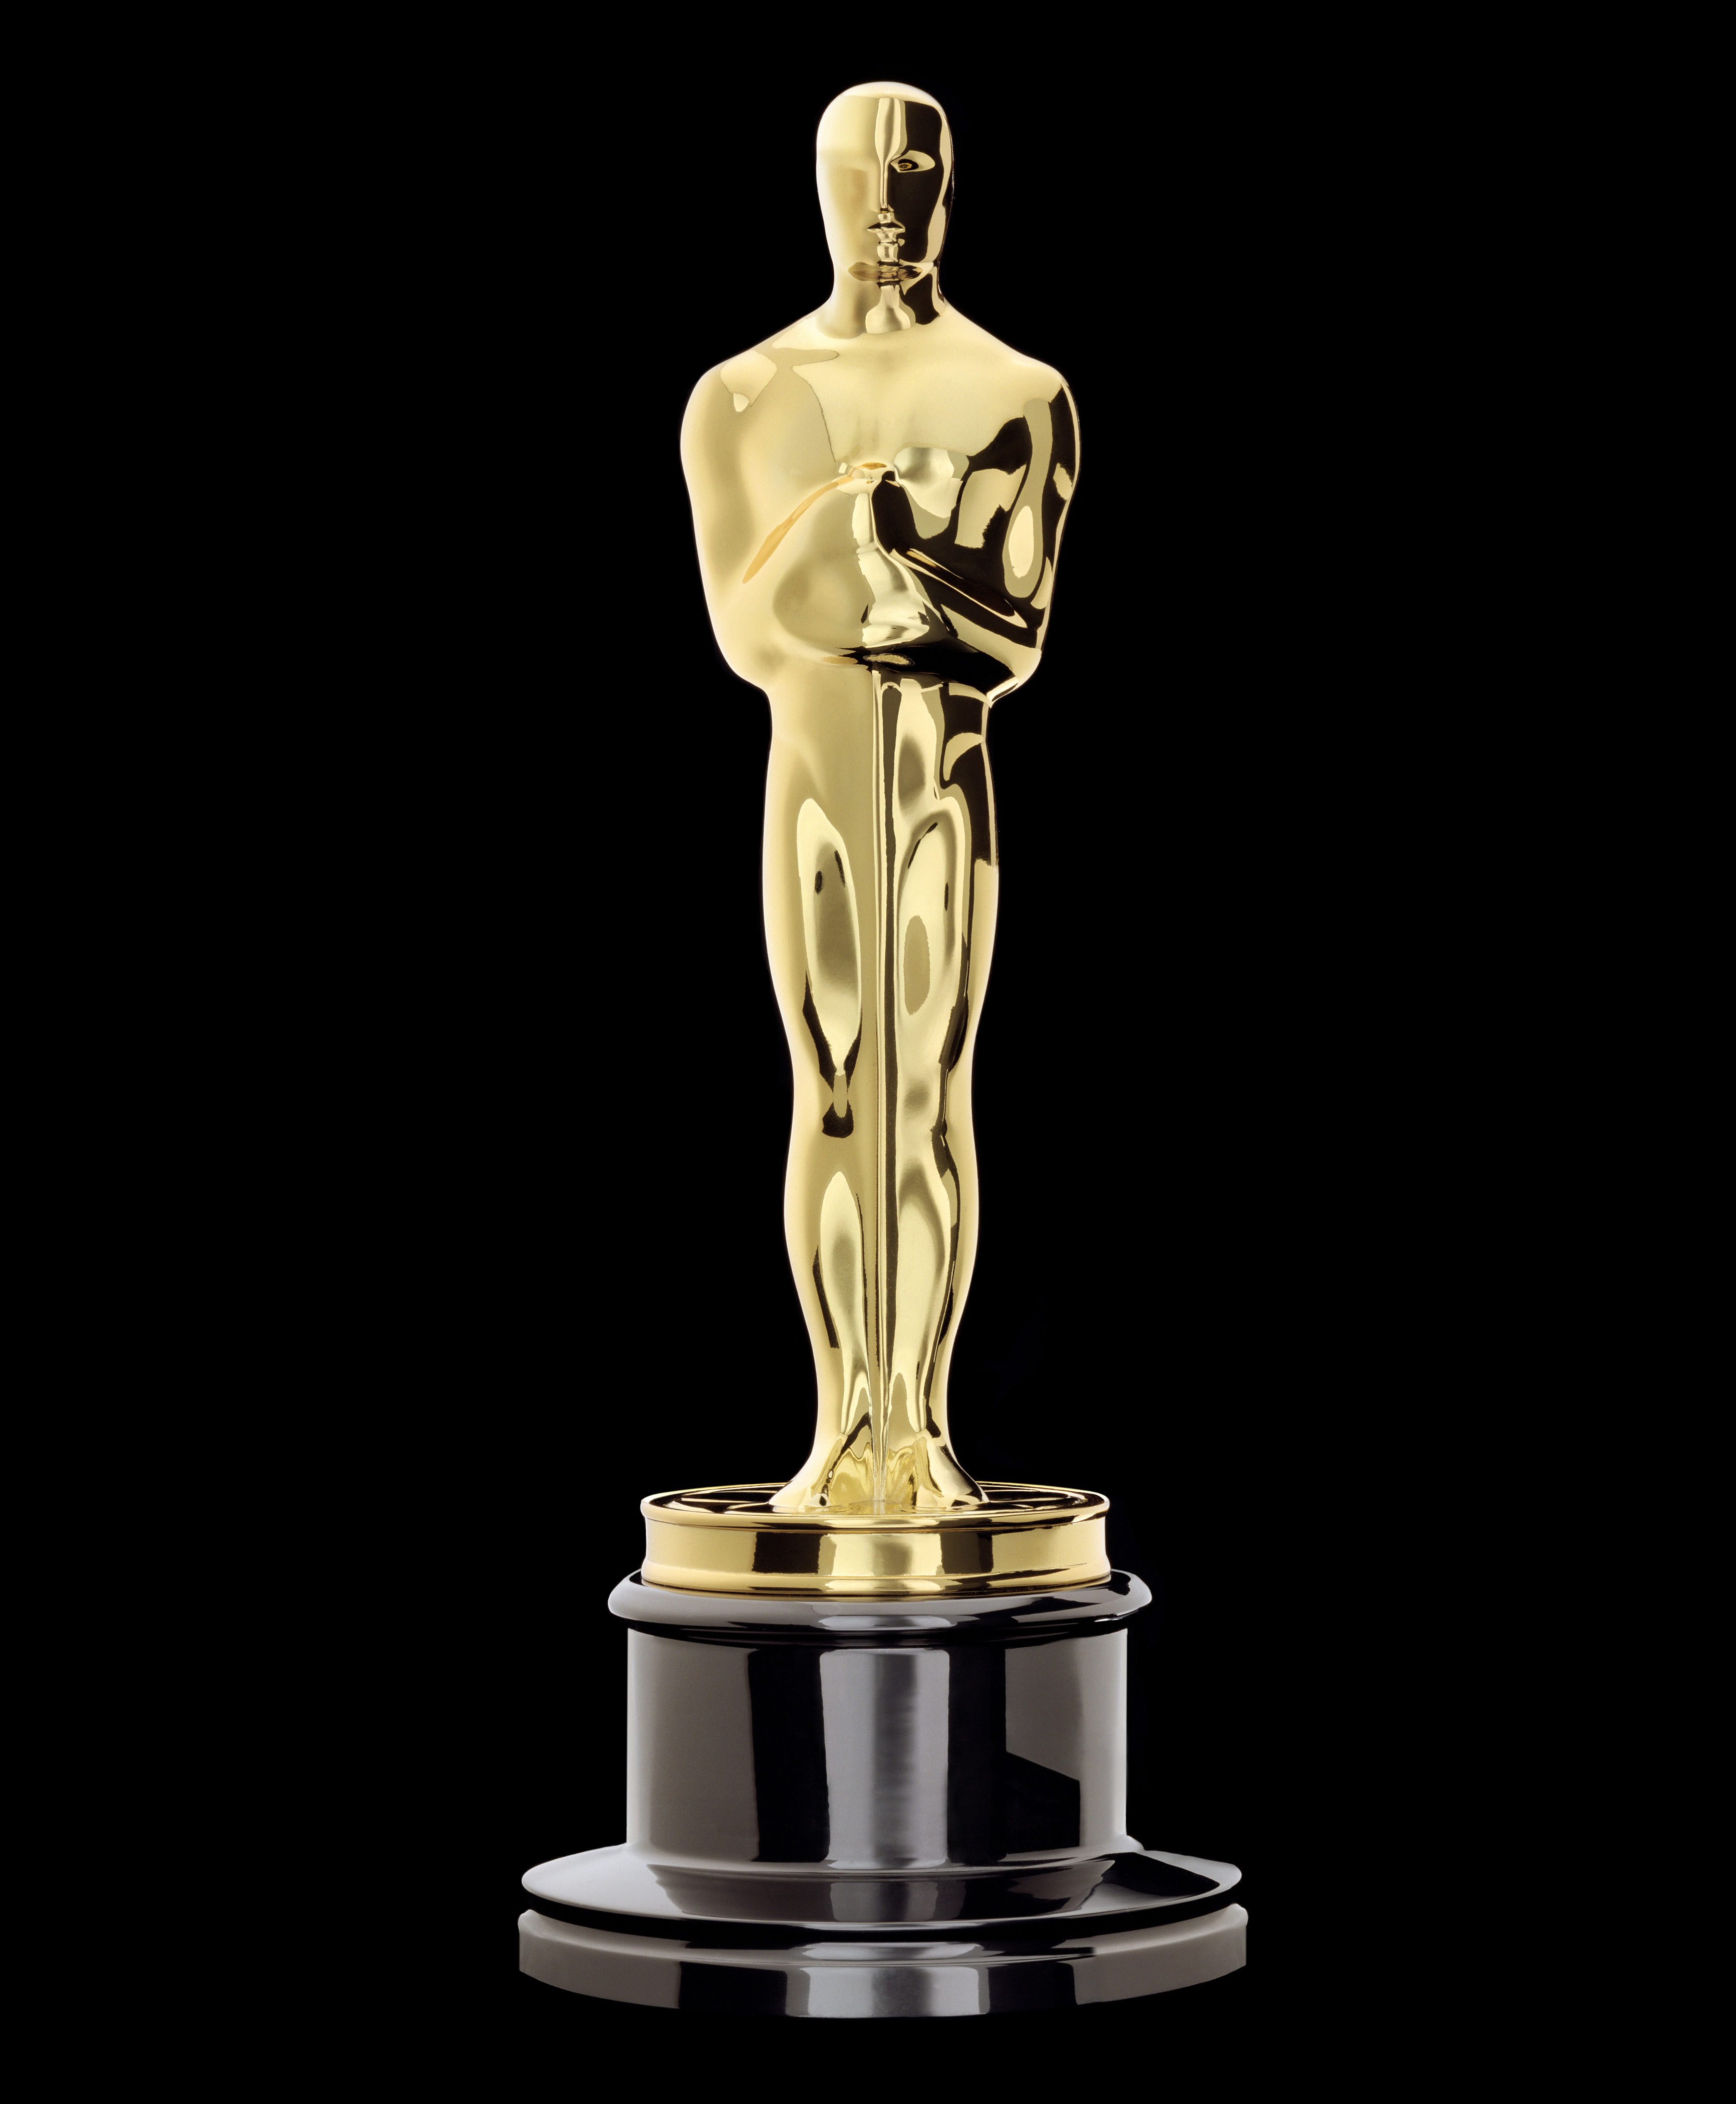 Oscar Award Trophy Png - 81St Academy Awards¨ Press Kit Images, Transparent background PNG HD thumbnail